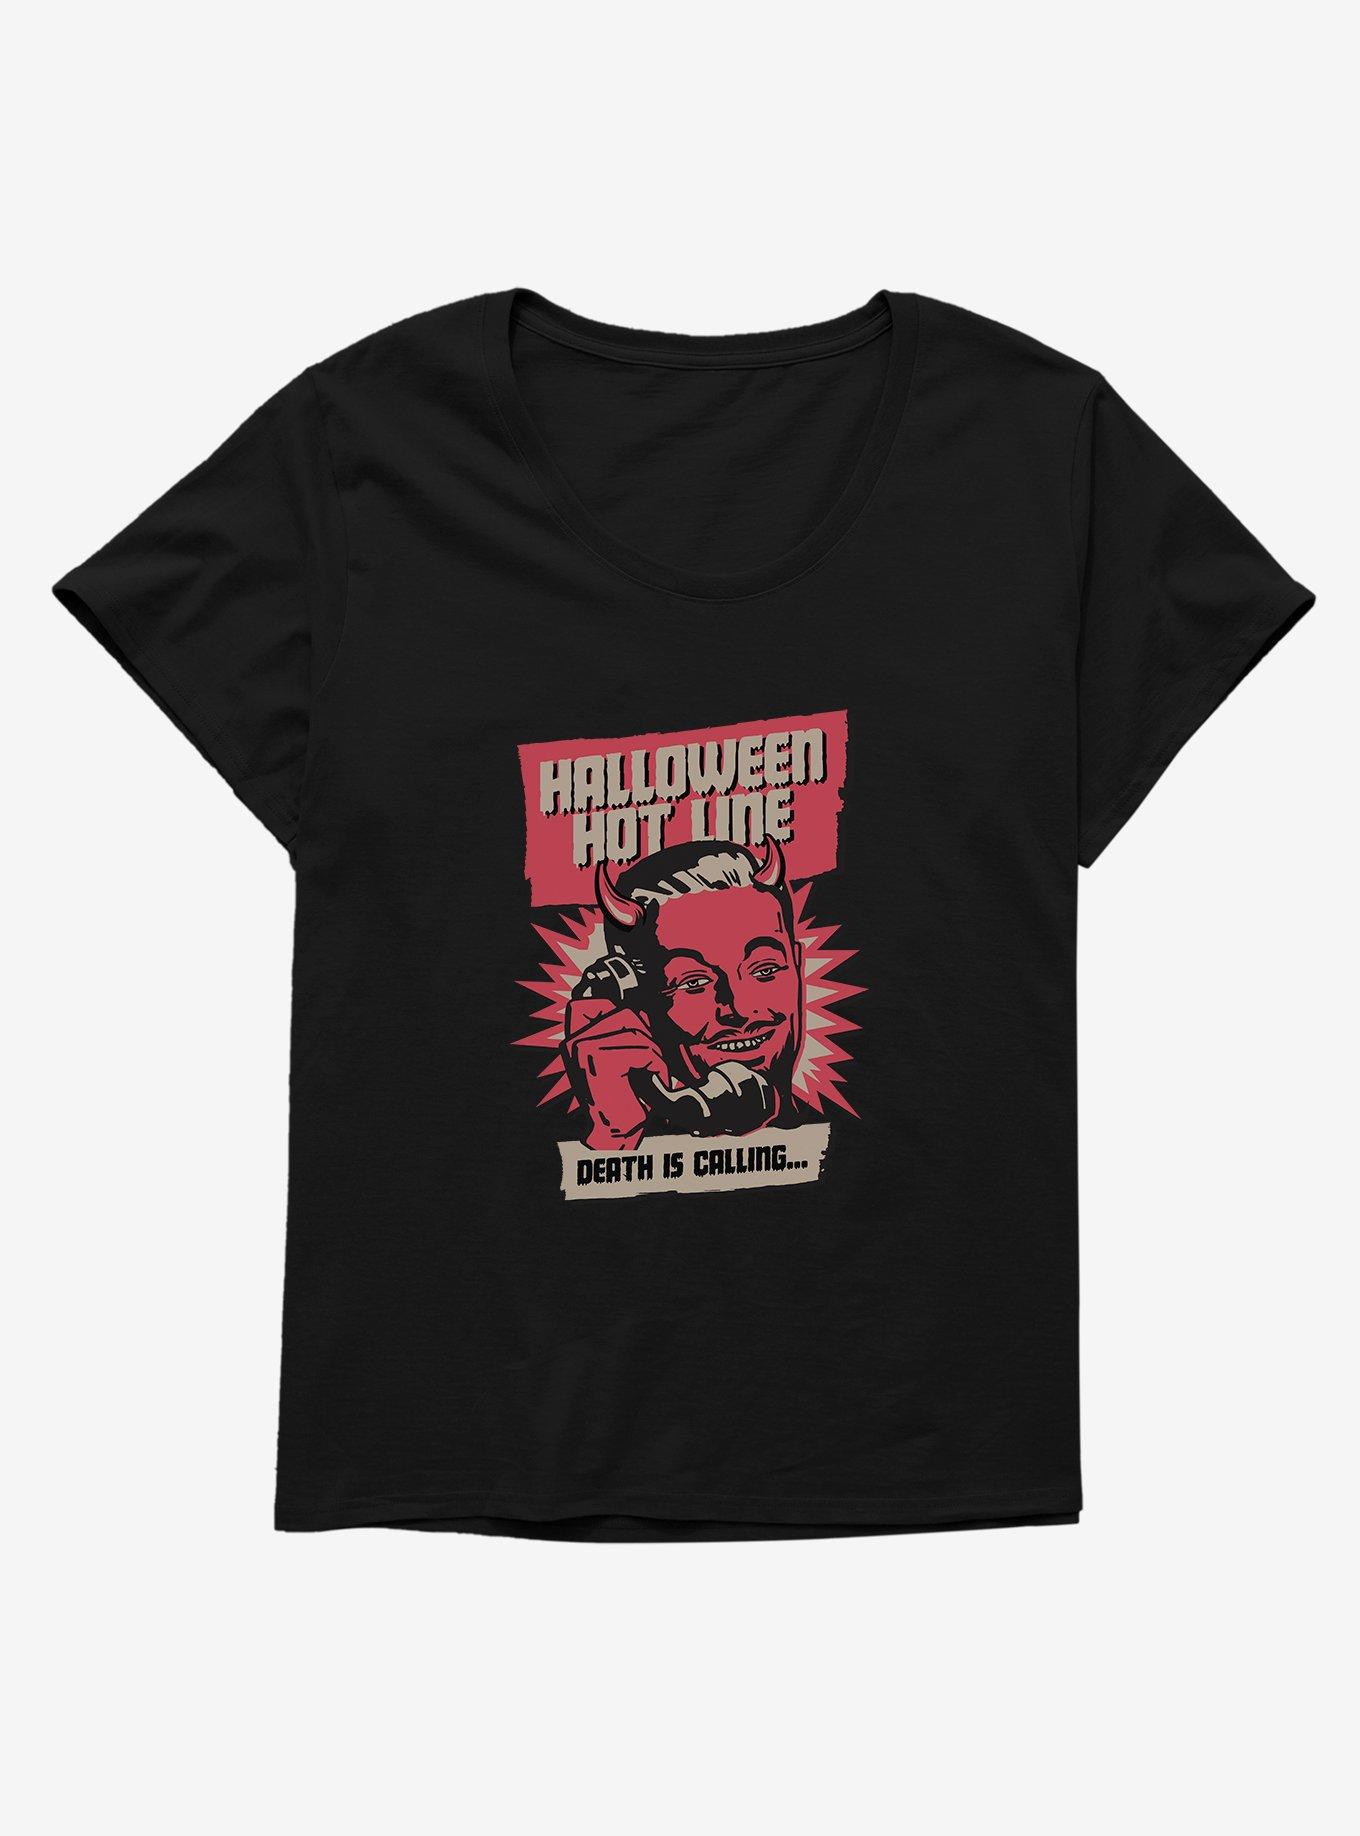 Halloween Halloween Hot Line Girls Plus Size T-Shirt, BLACK, hi-res